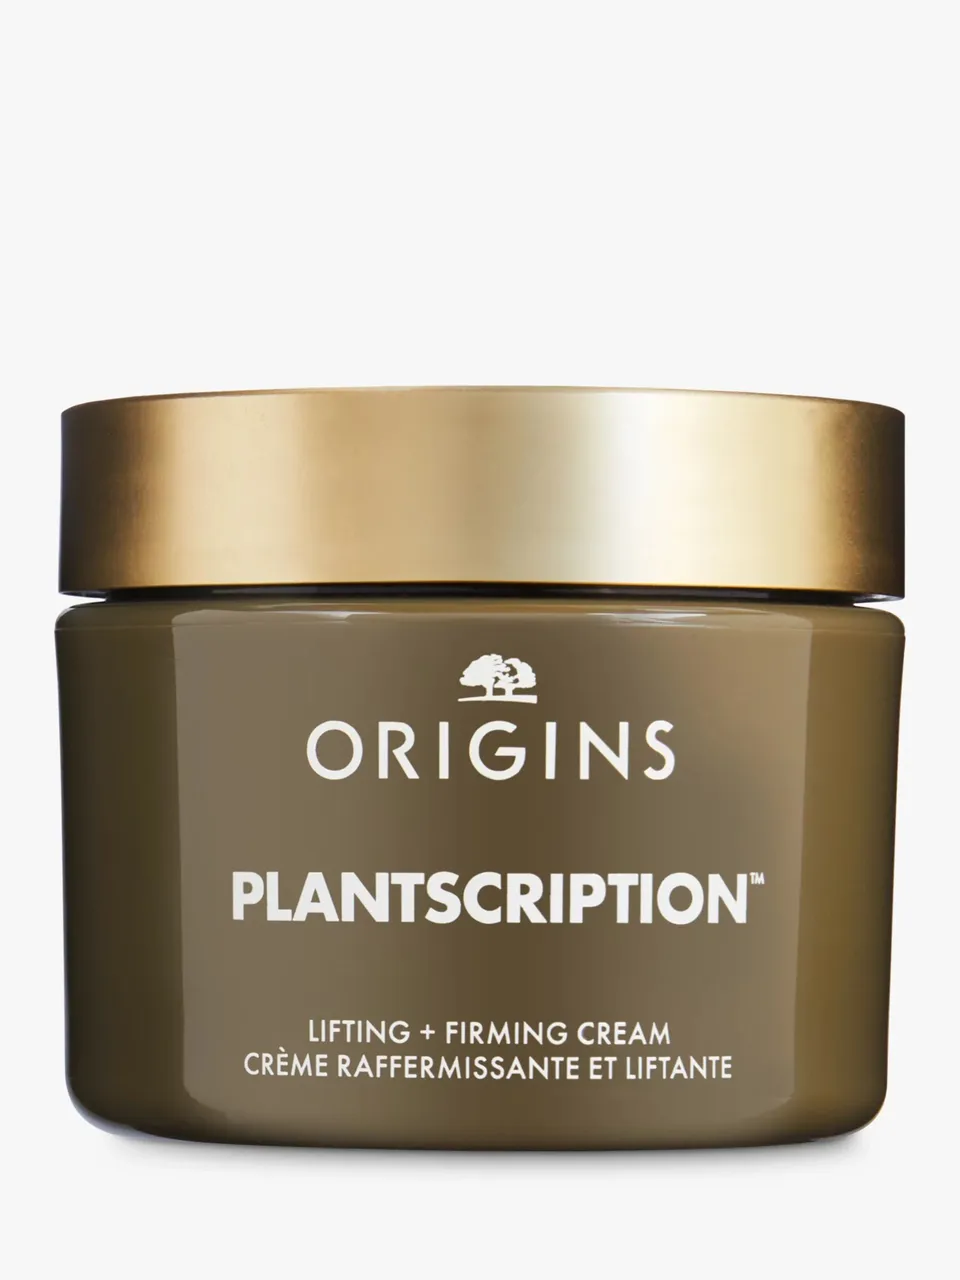 Origins Plantscriptionâ„¢ Lifting + Firming Cream, 50ml - Unisex - Size: 50ml